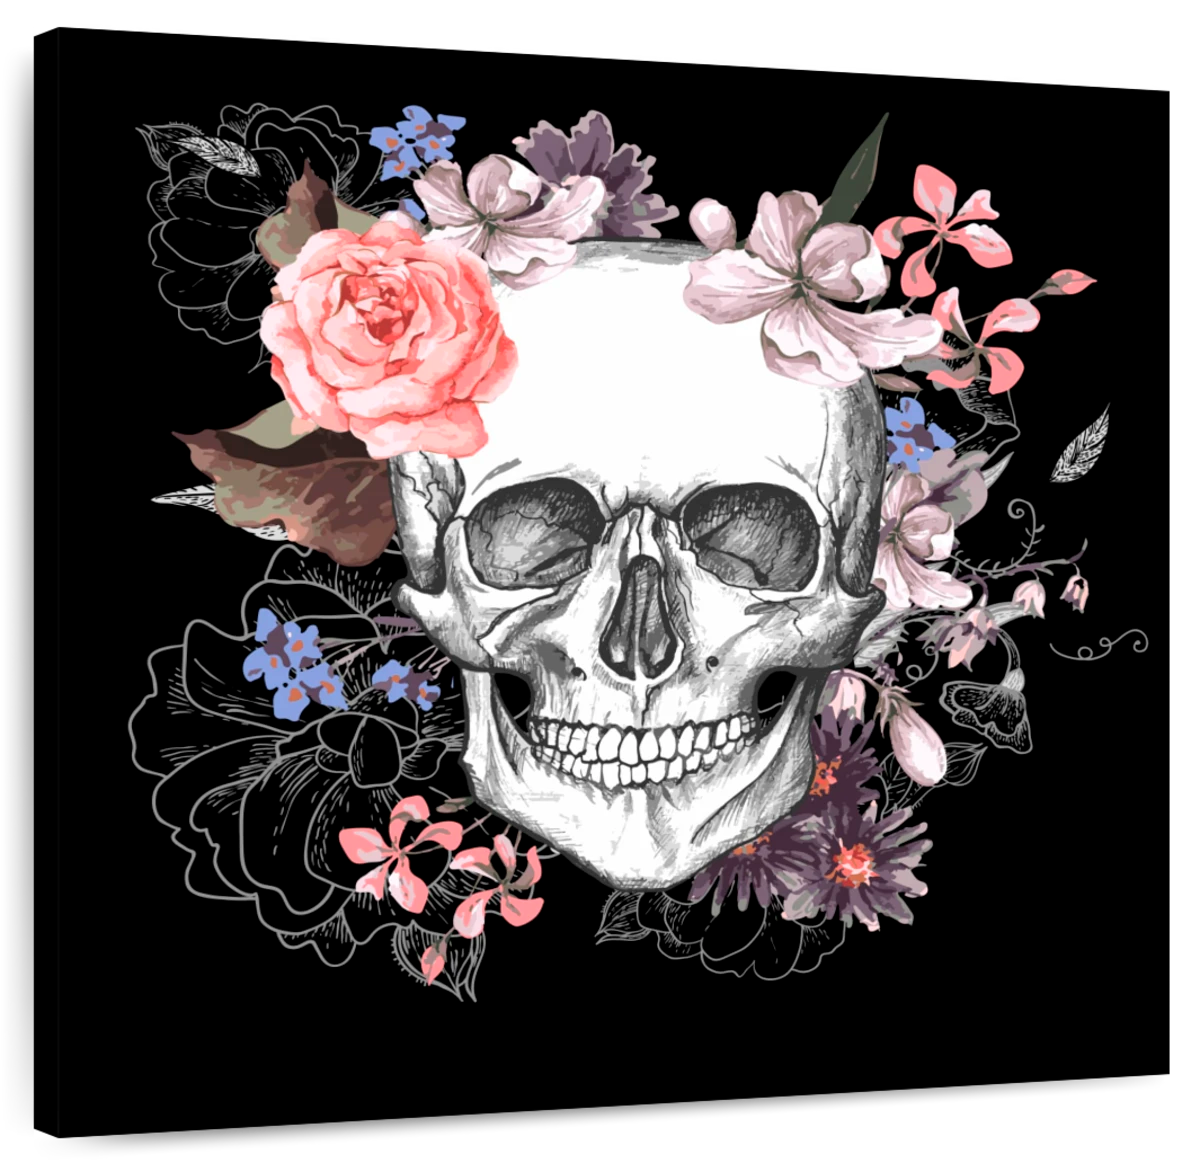 Wall Art Print, Skull & flowers